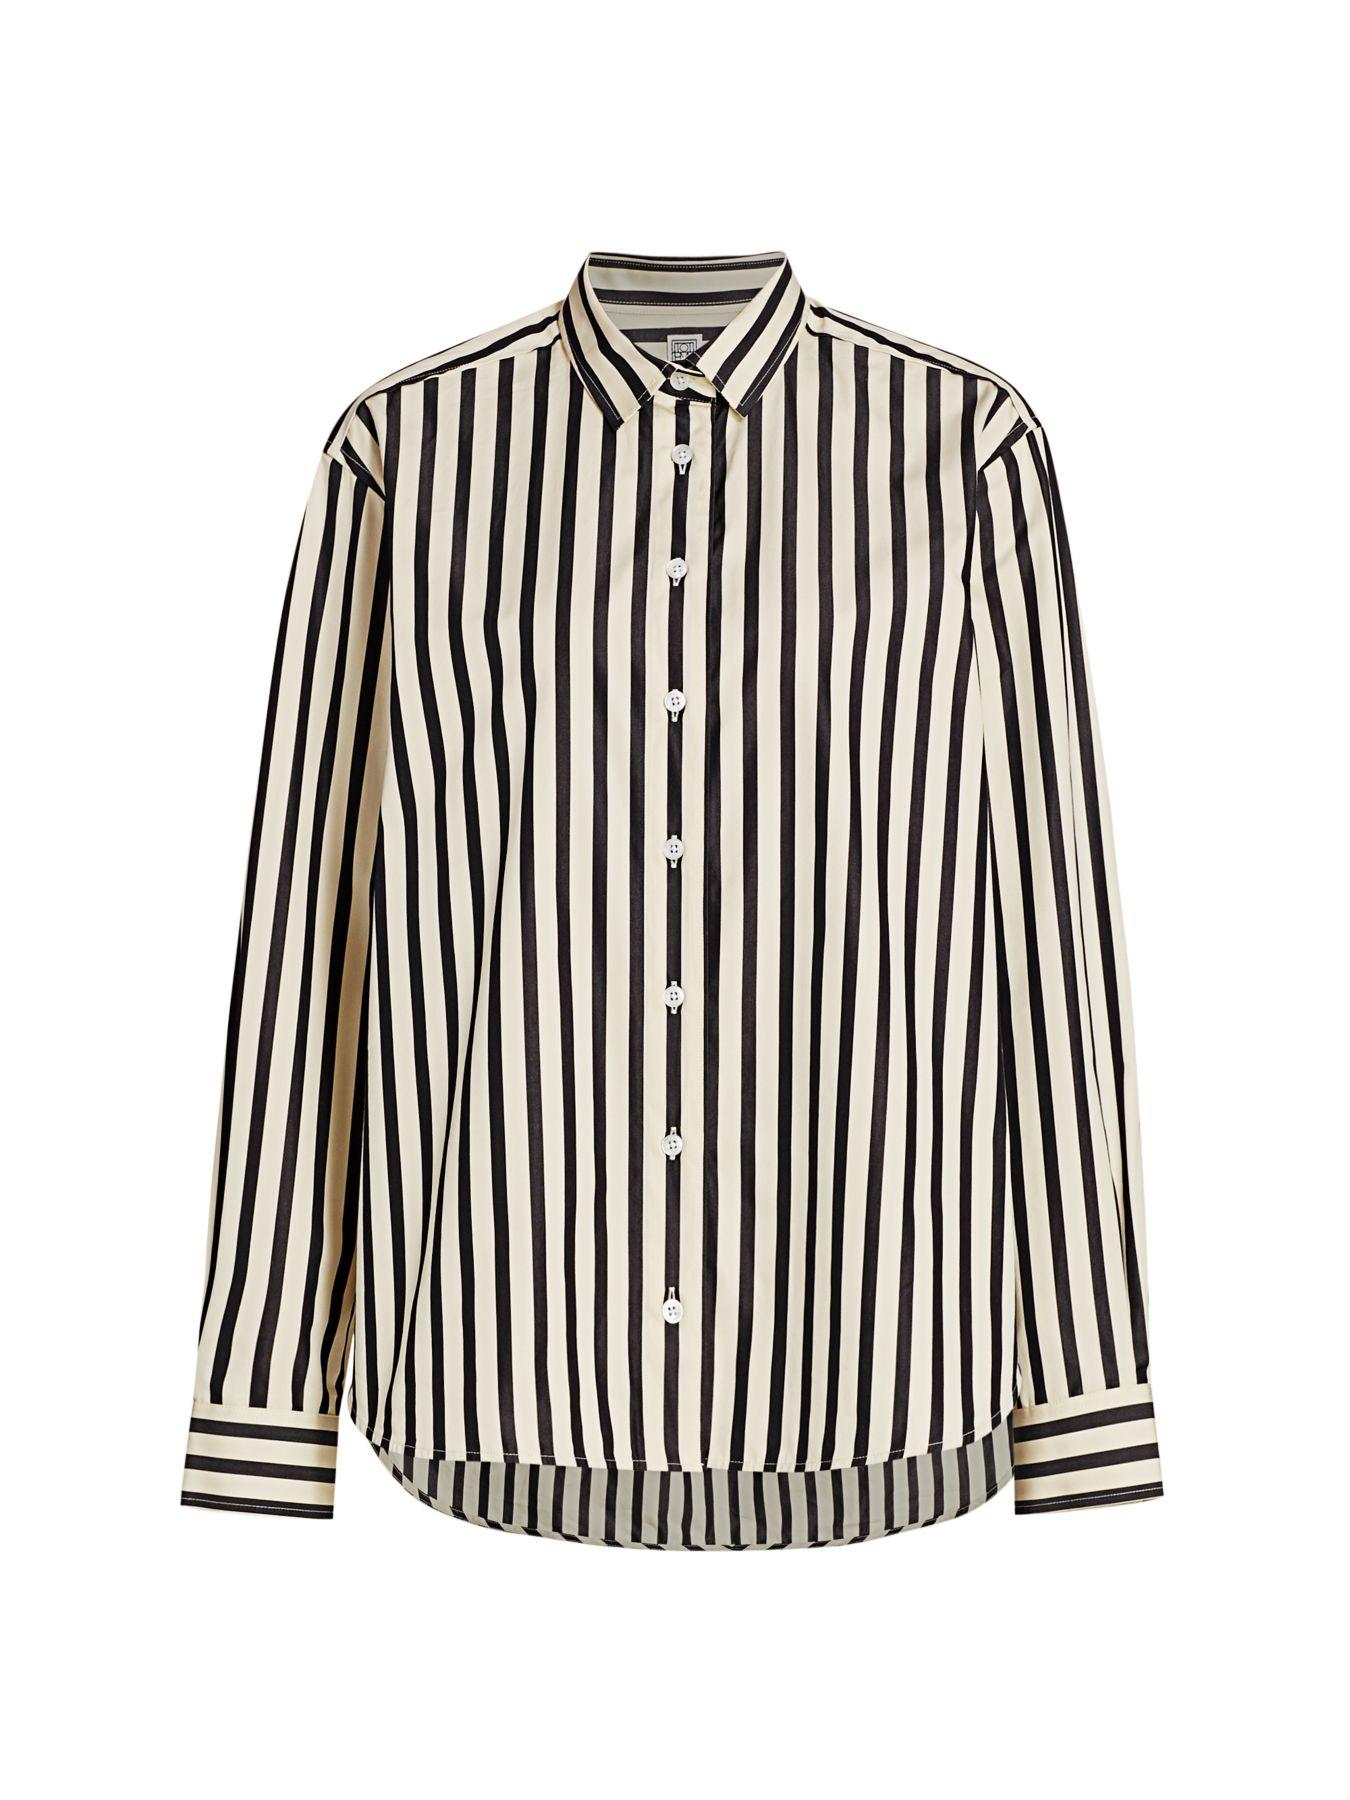 Totême Cotton Capri Striped Shirt in Black Stripe (Black) - Lyst